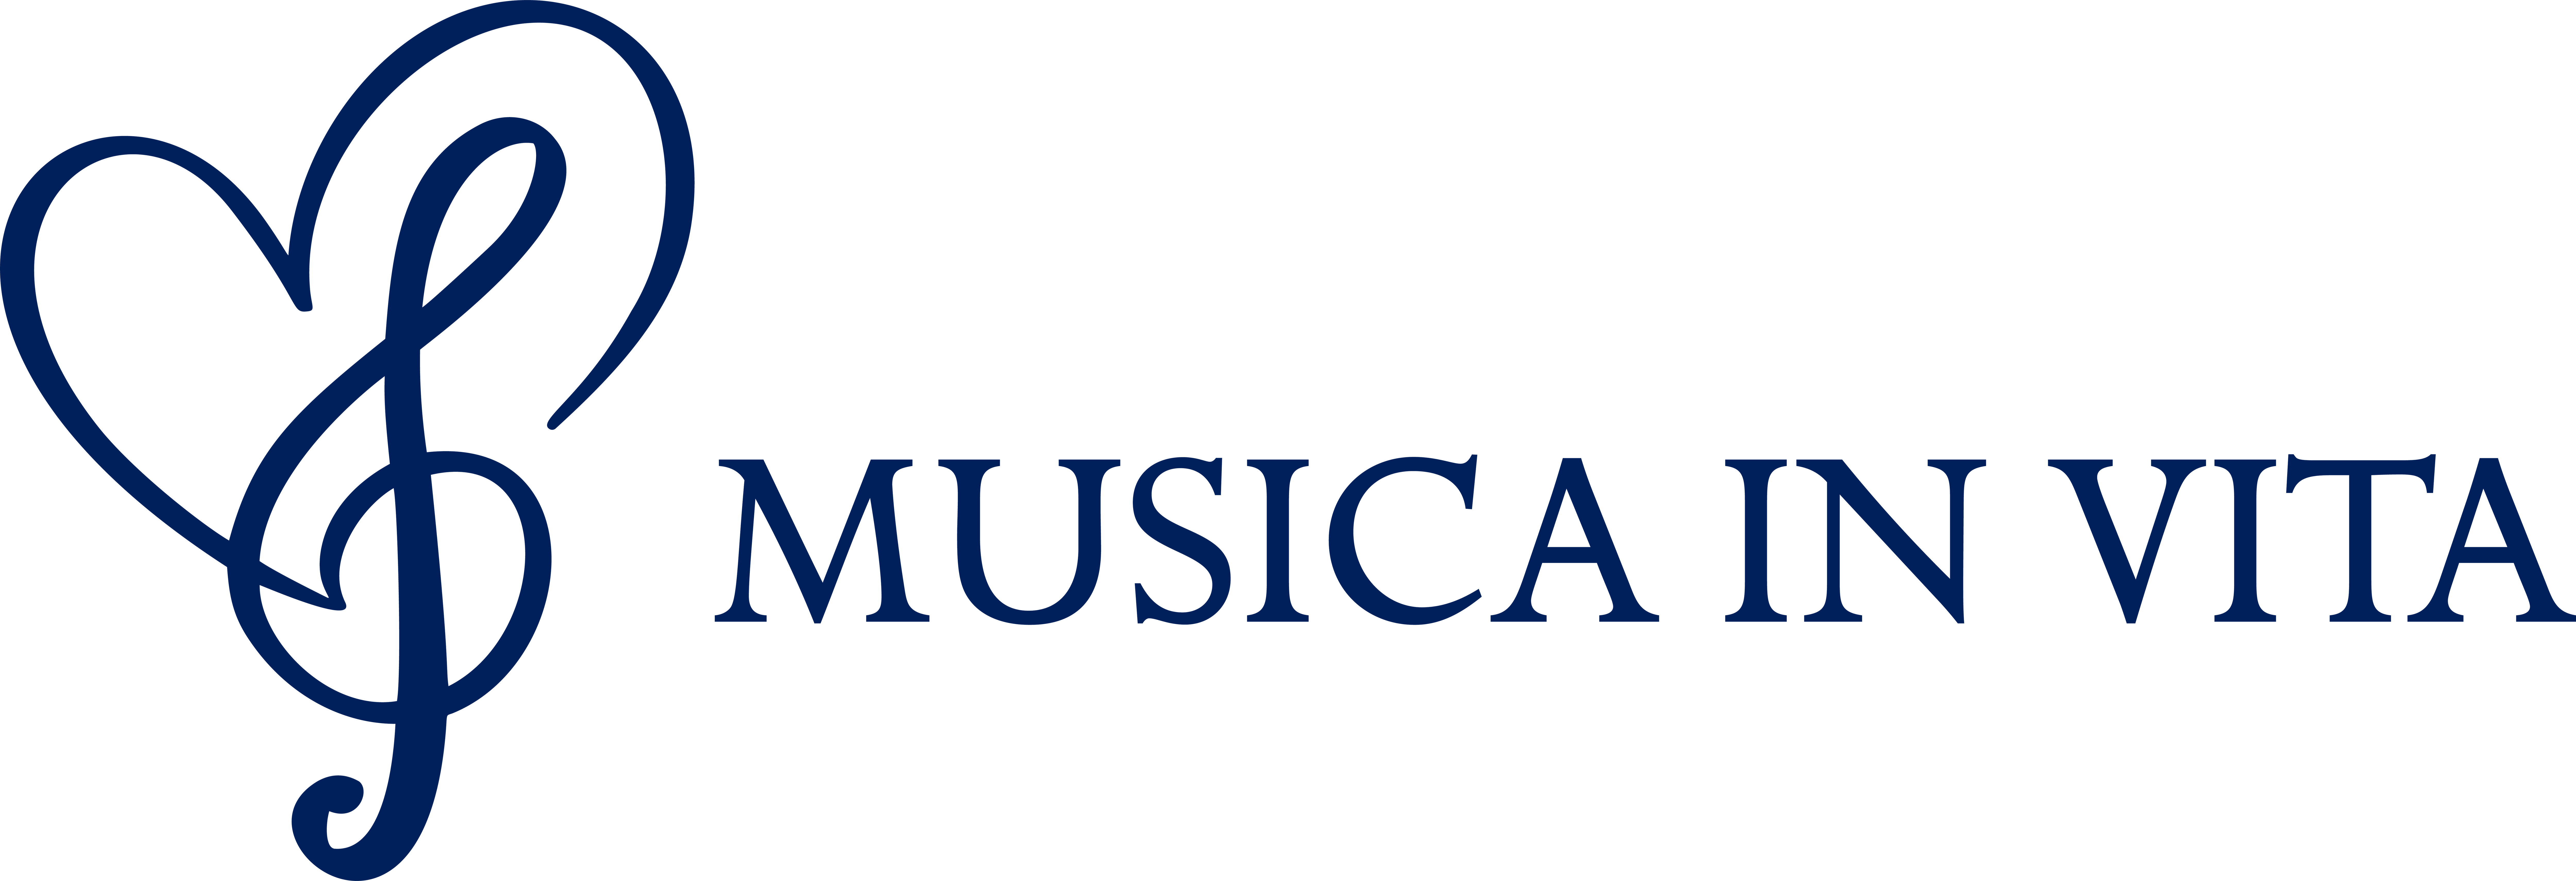 Stichting Musica in Vita logo